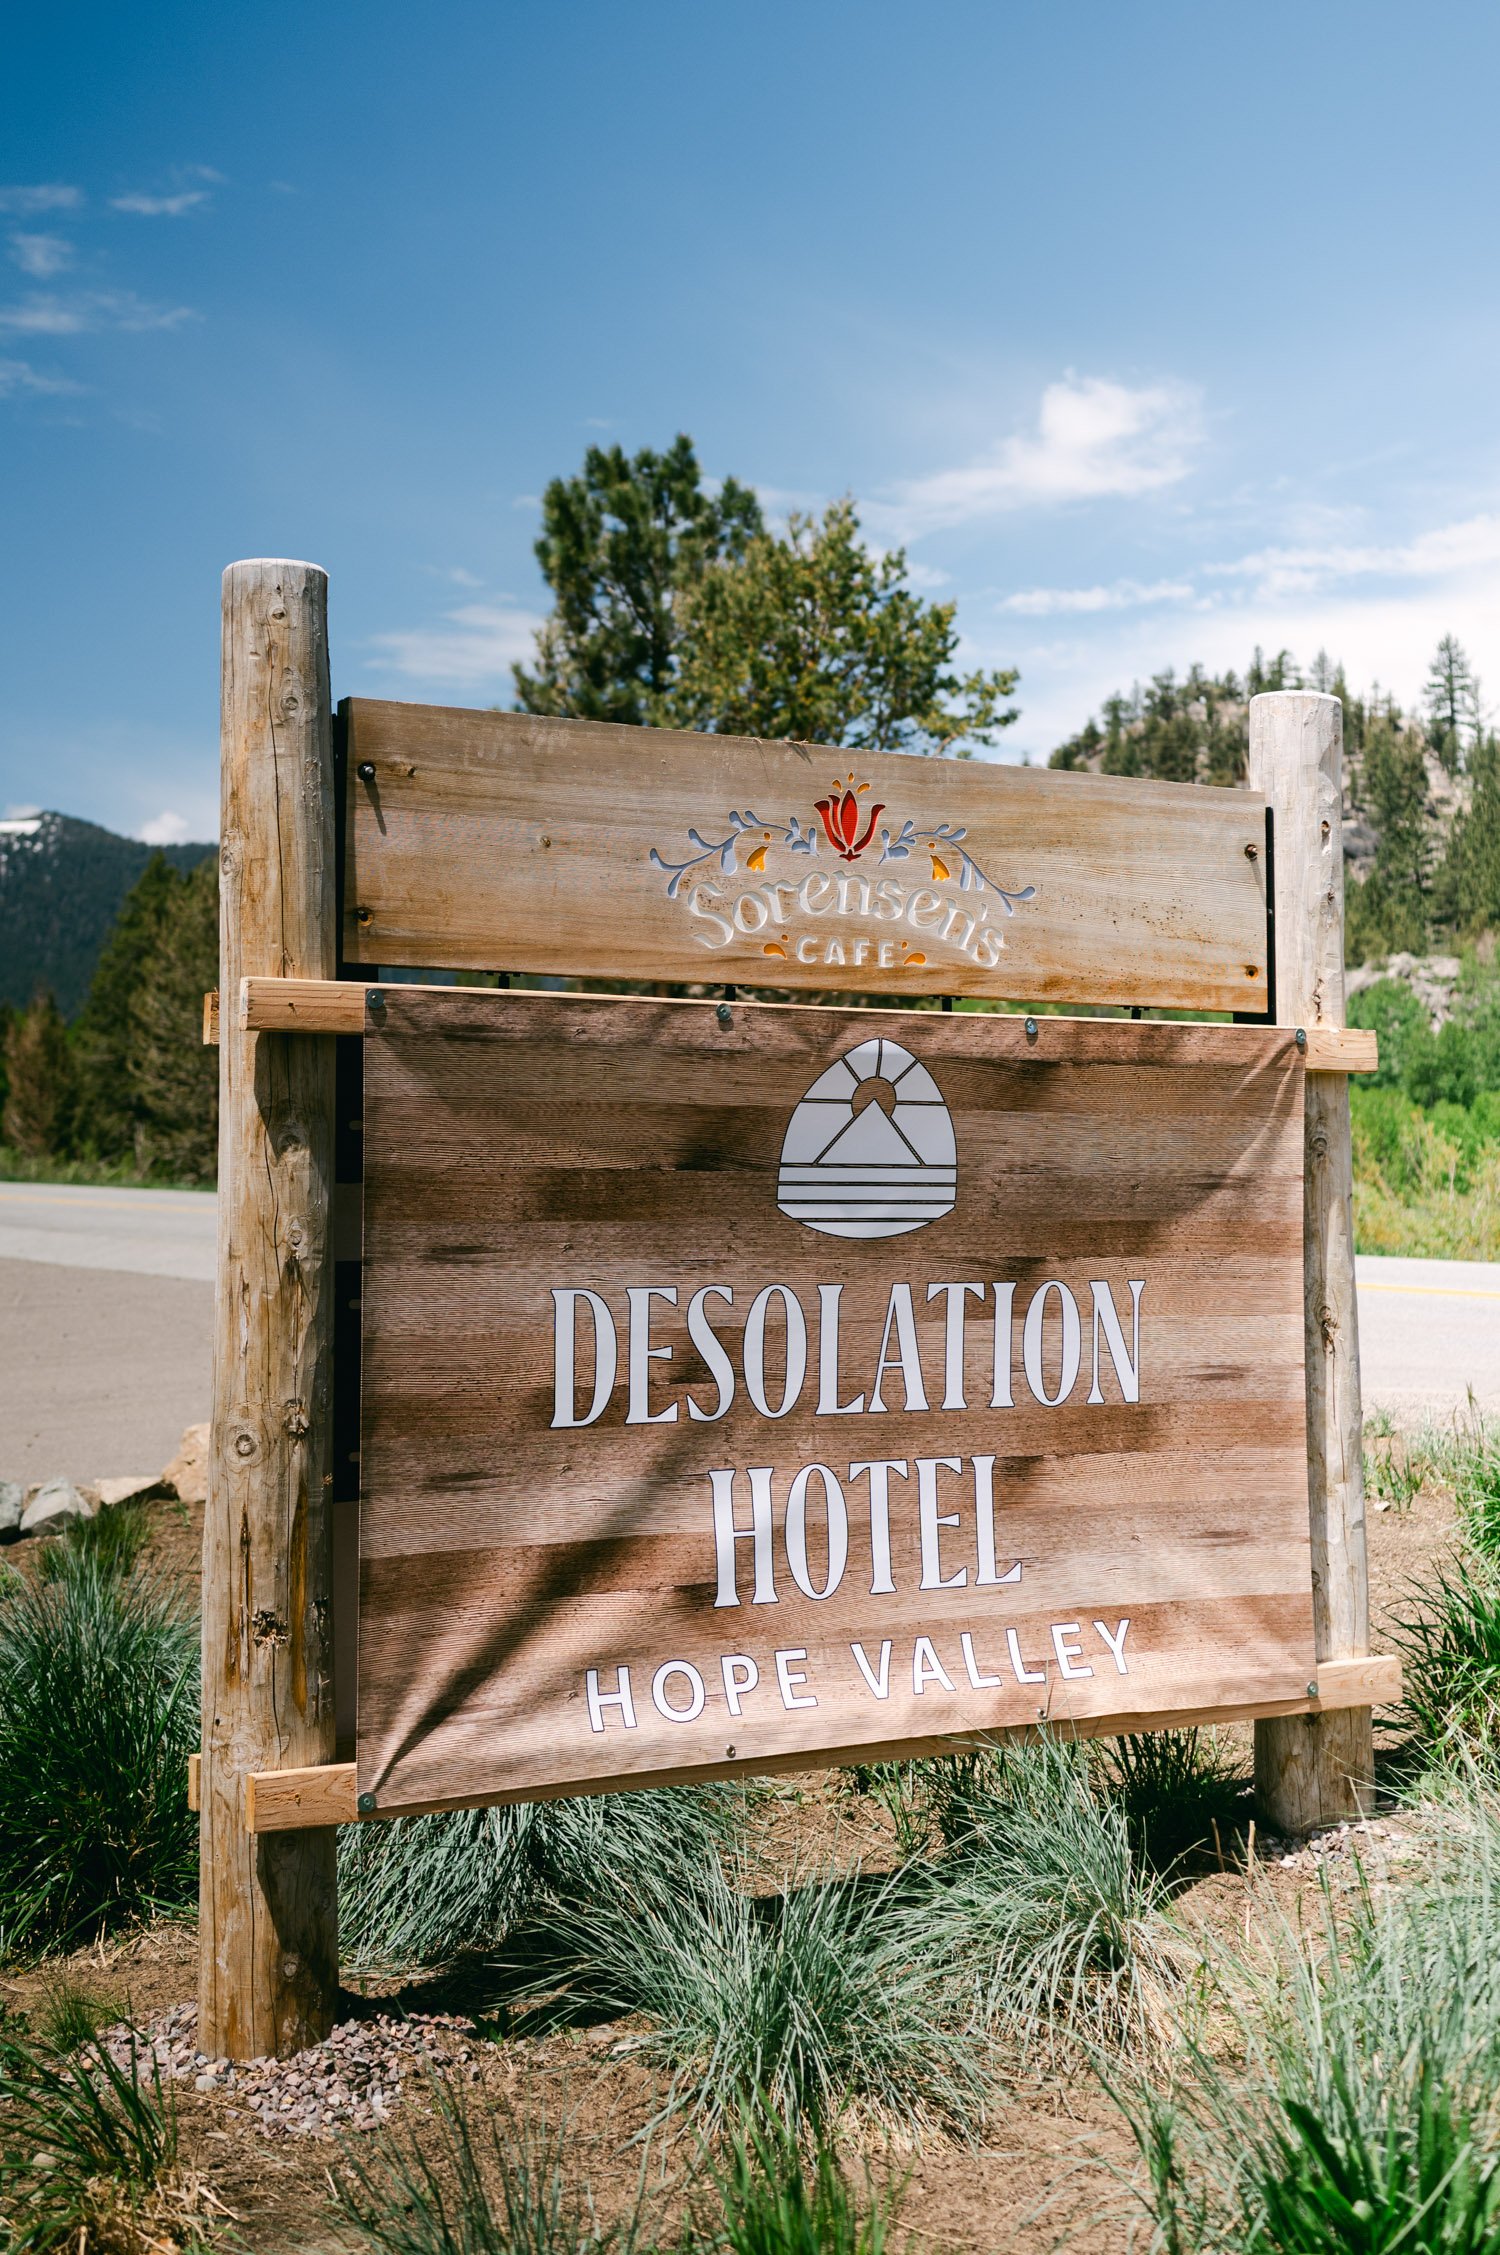 Desolation wilderness hotel wedding, photo of the desolation wilderness hotel sign